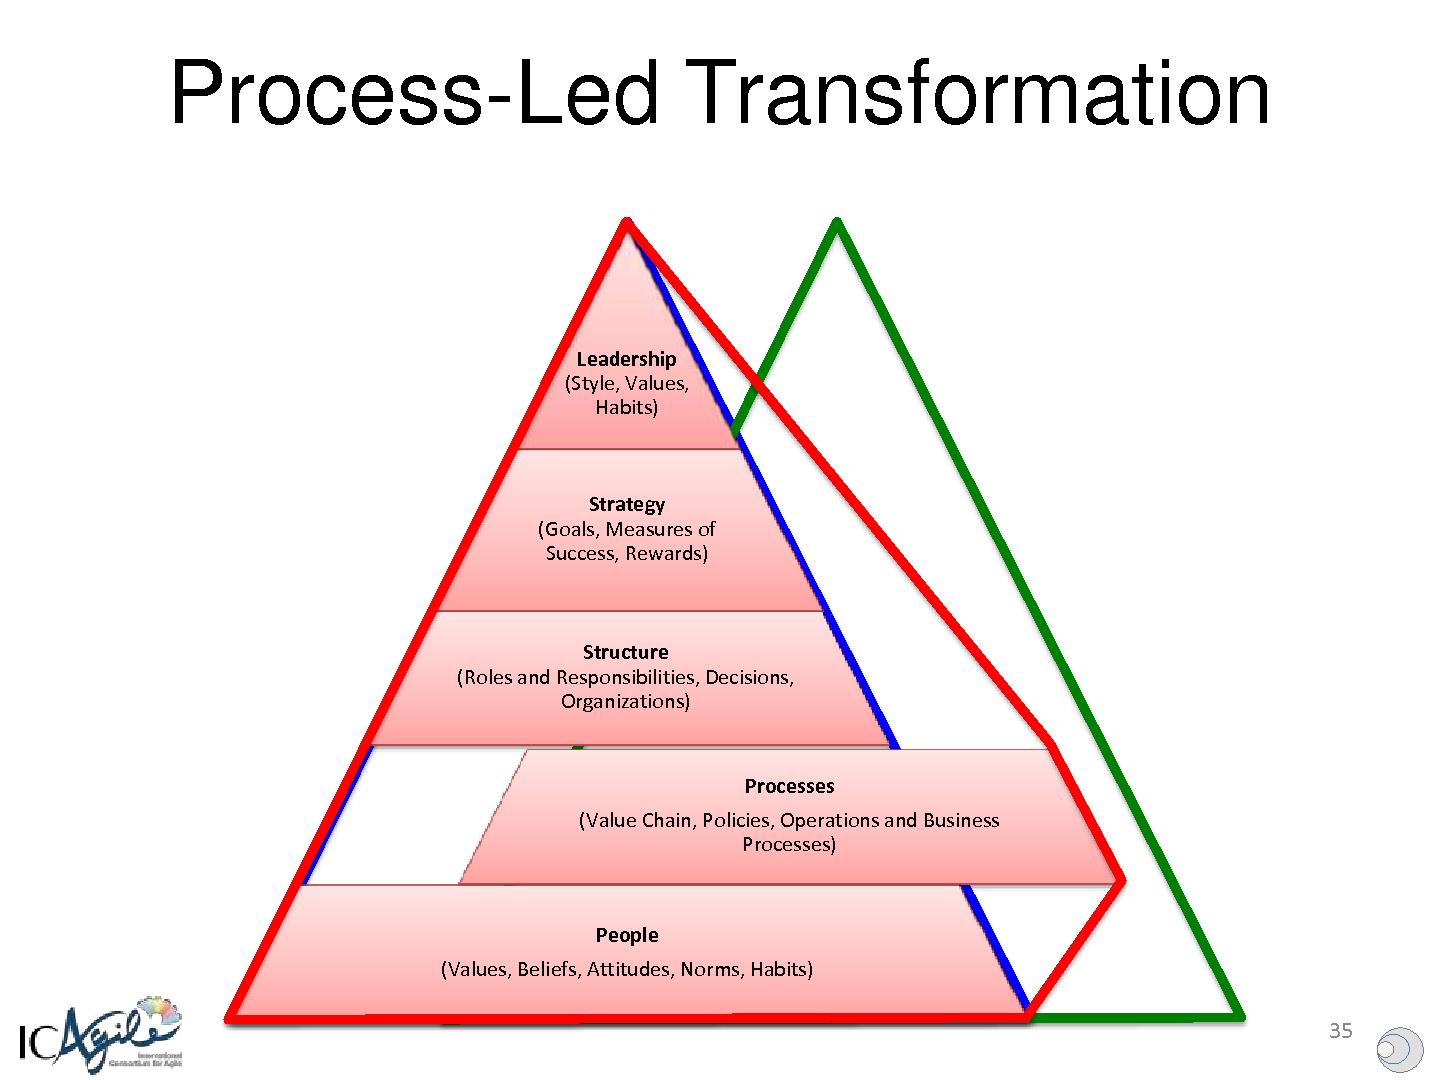 Файл:Using Keystone Habits to Transform Enterprises and Achieve Sustainable Organizational Agility (Ahmed Sidky, AgileDays-2014).pdf